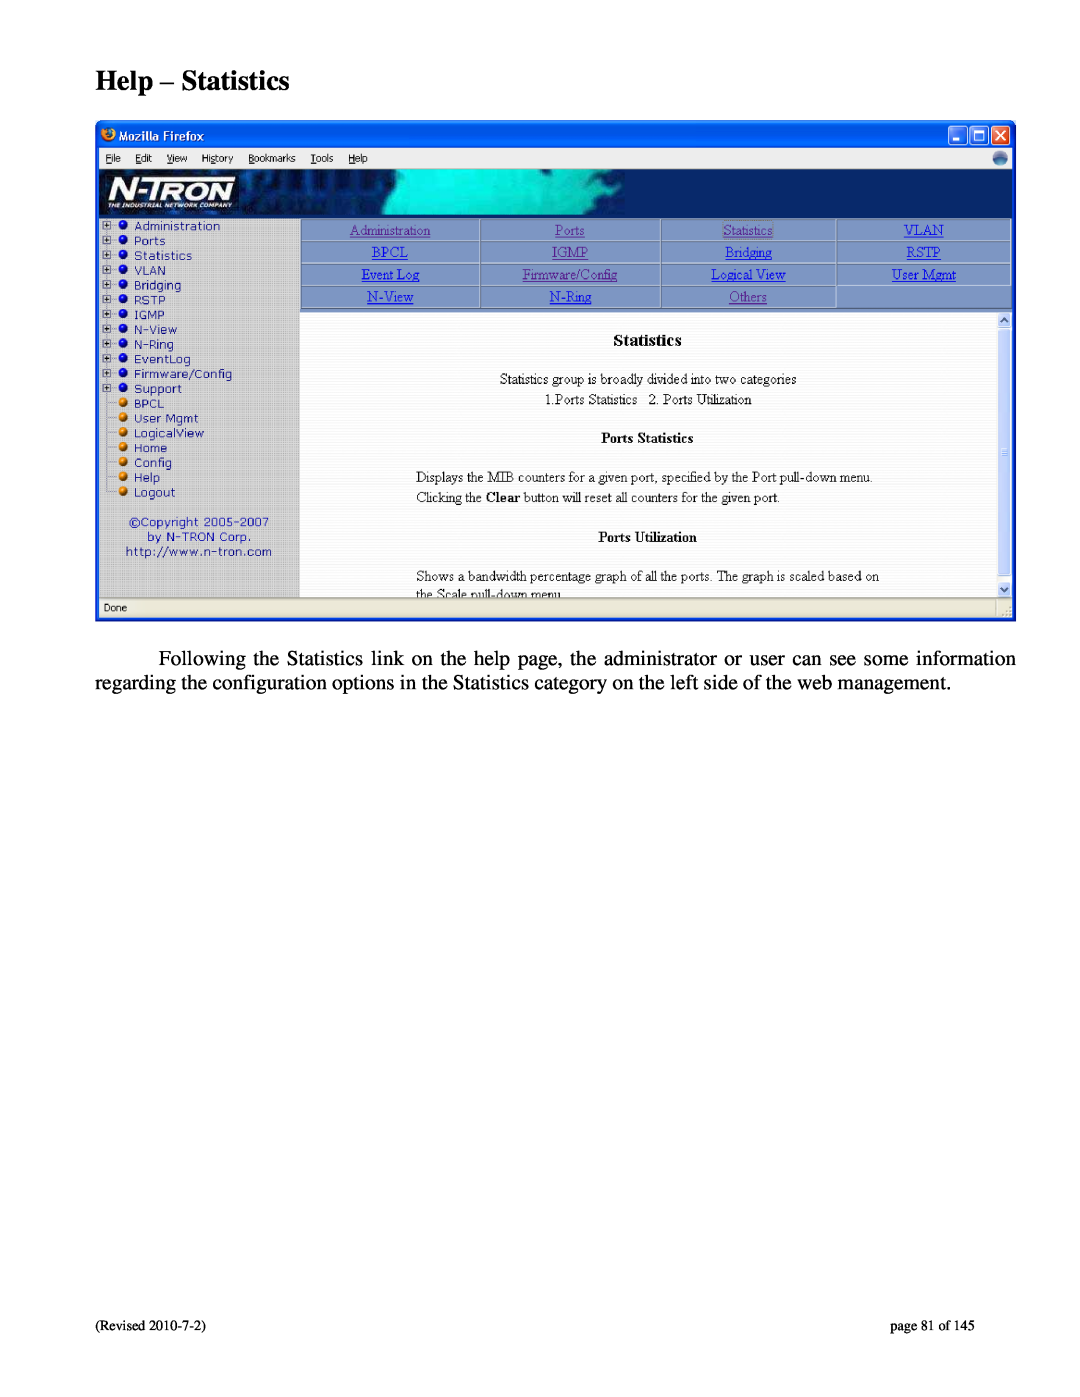 N-Tron 9000 user manual Help - Statistics, page 81 of 